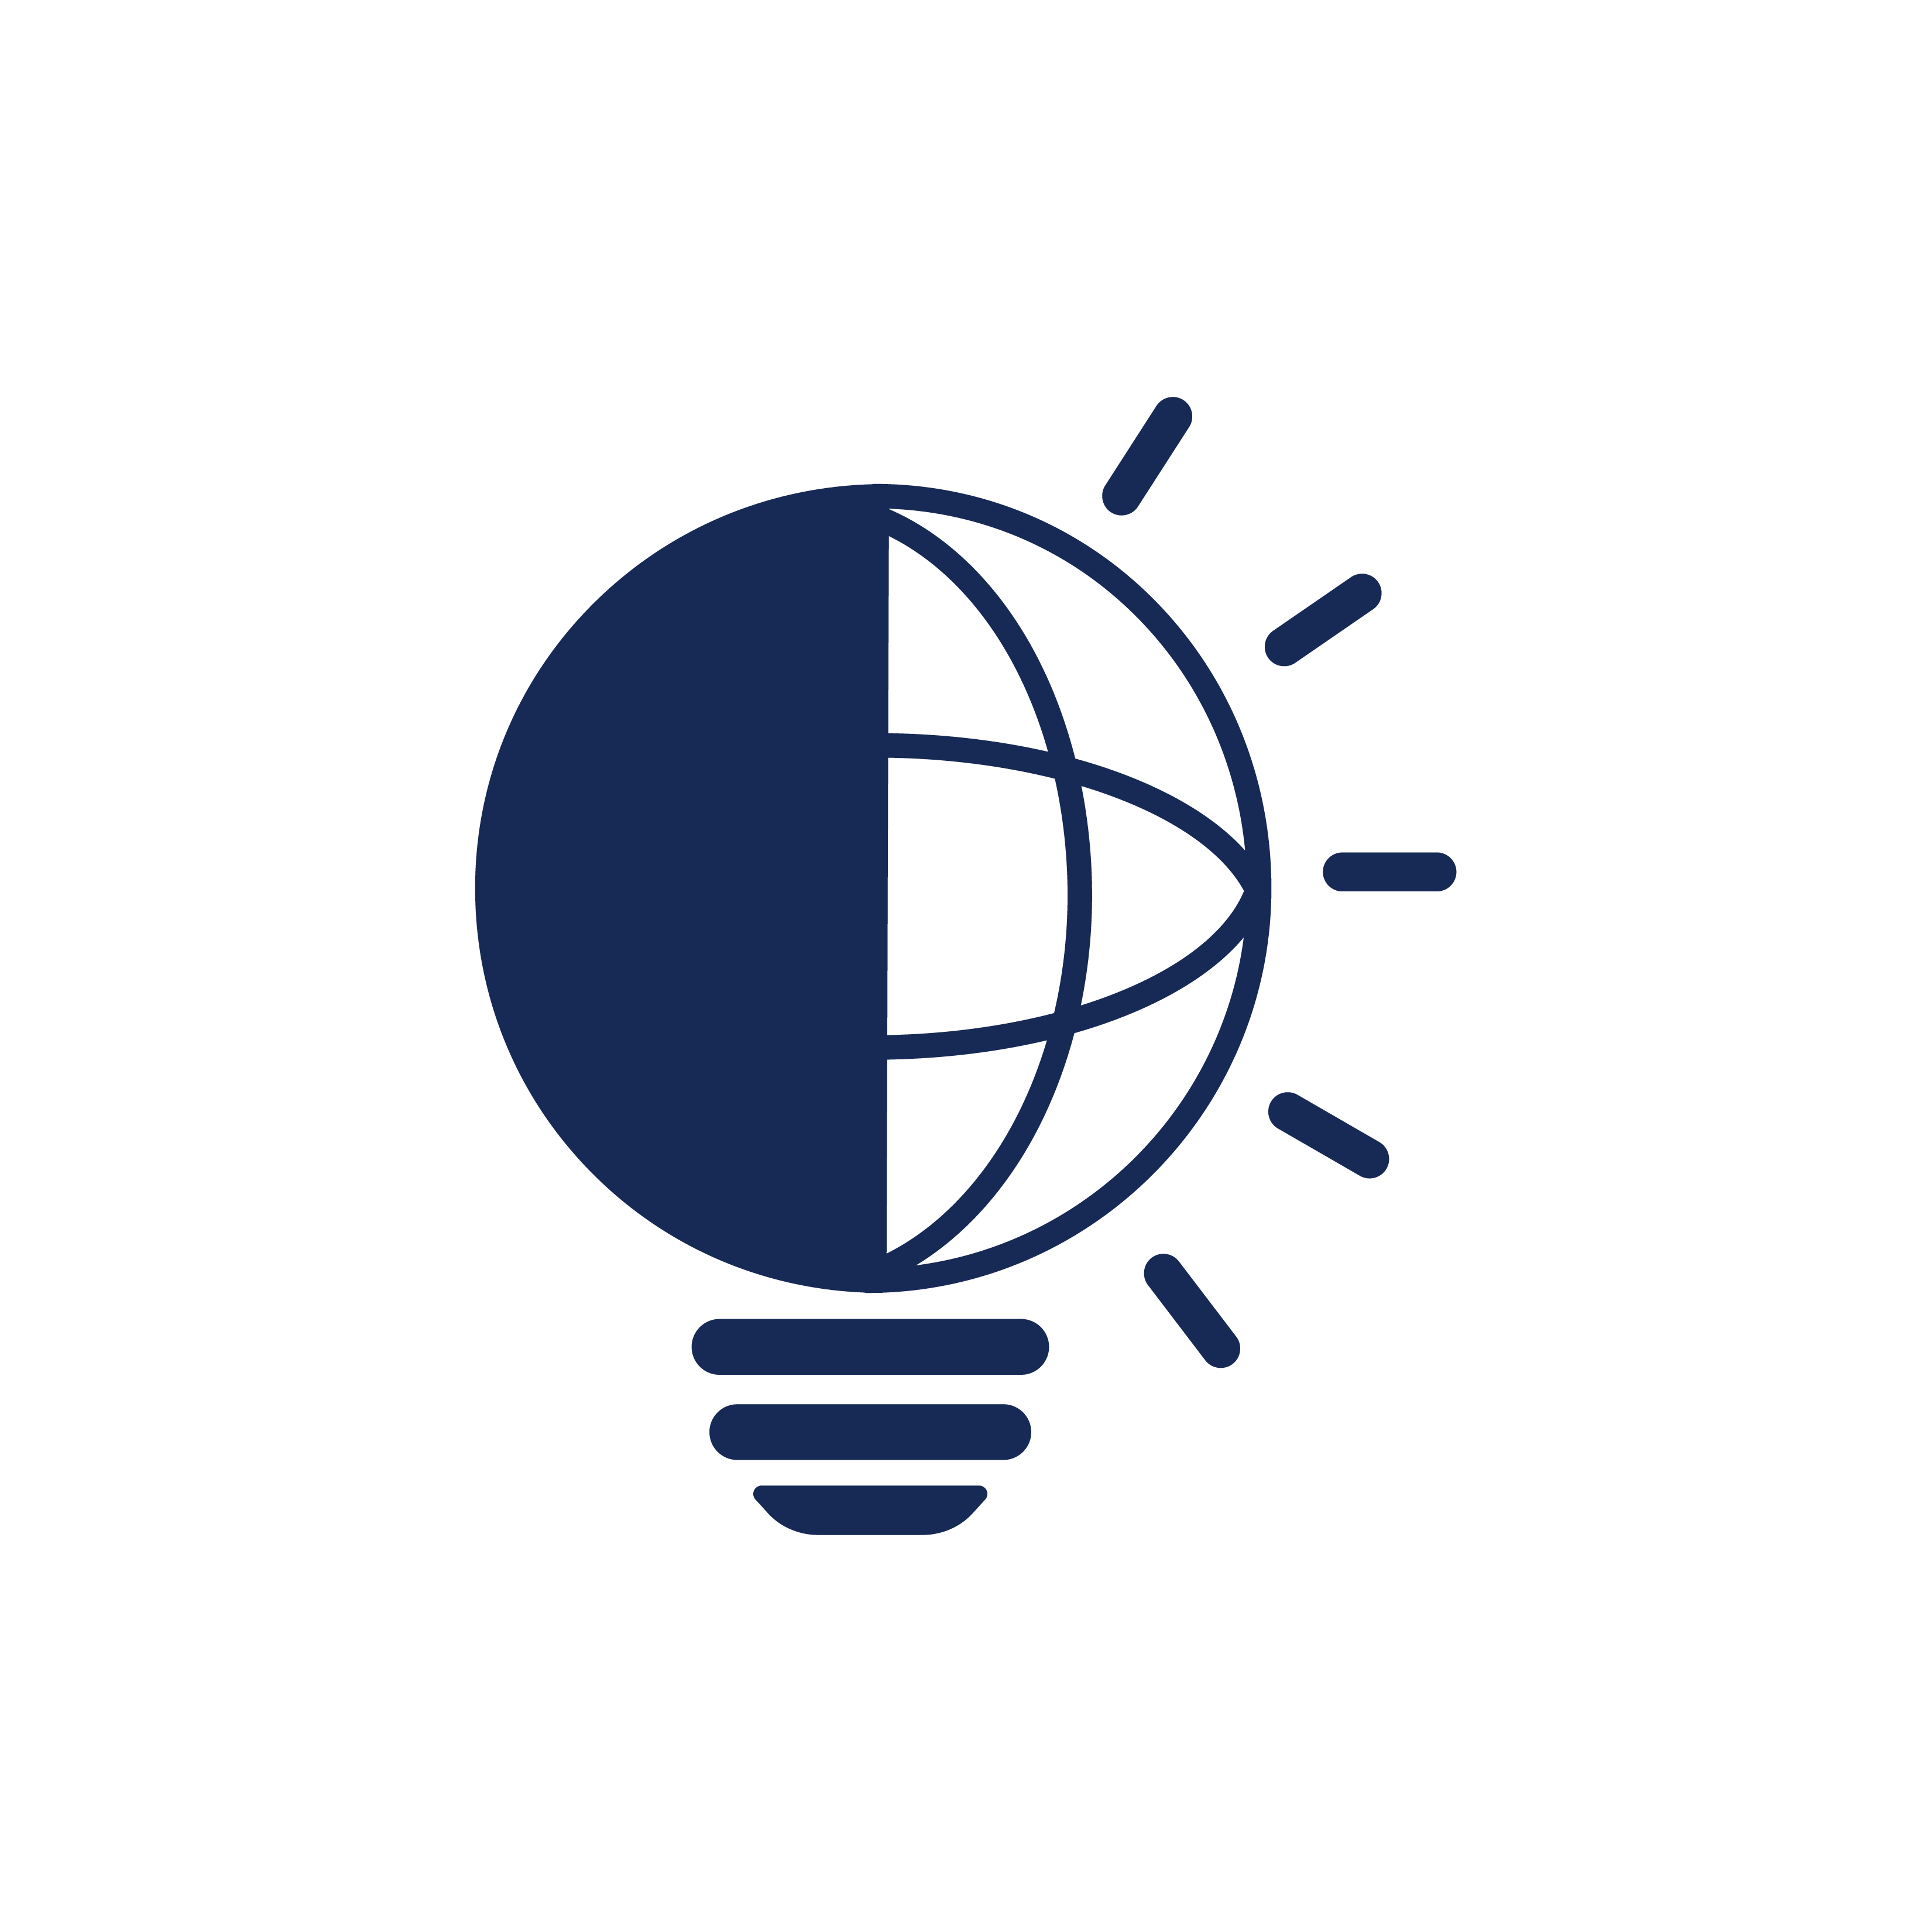 Icon of lightbulb with half globe